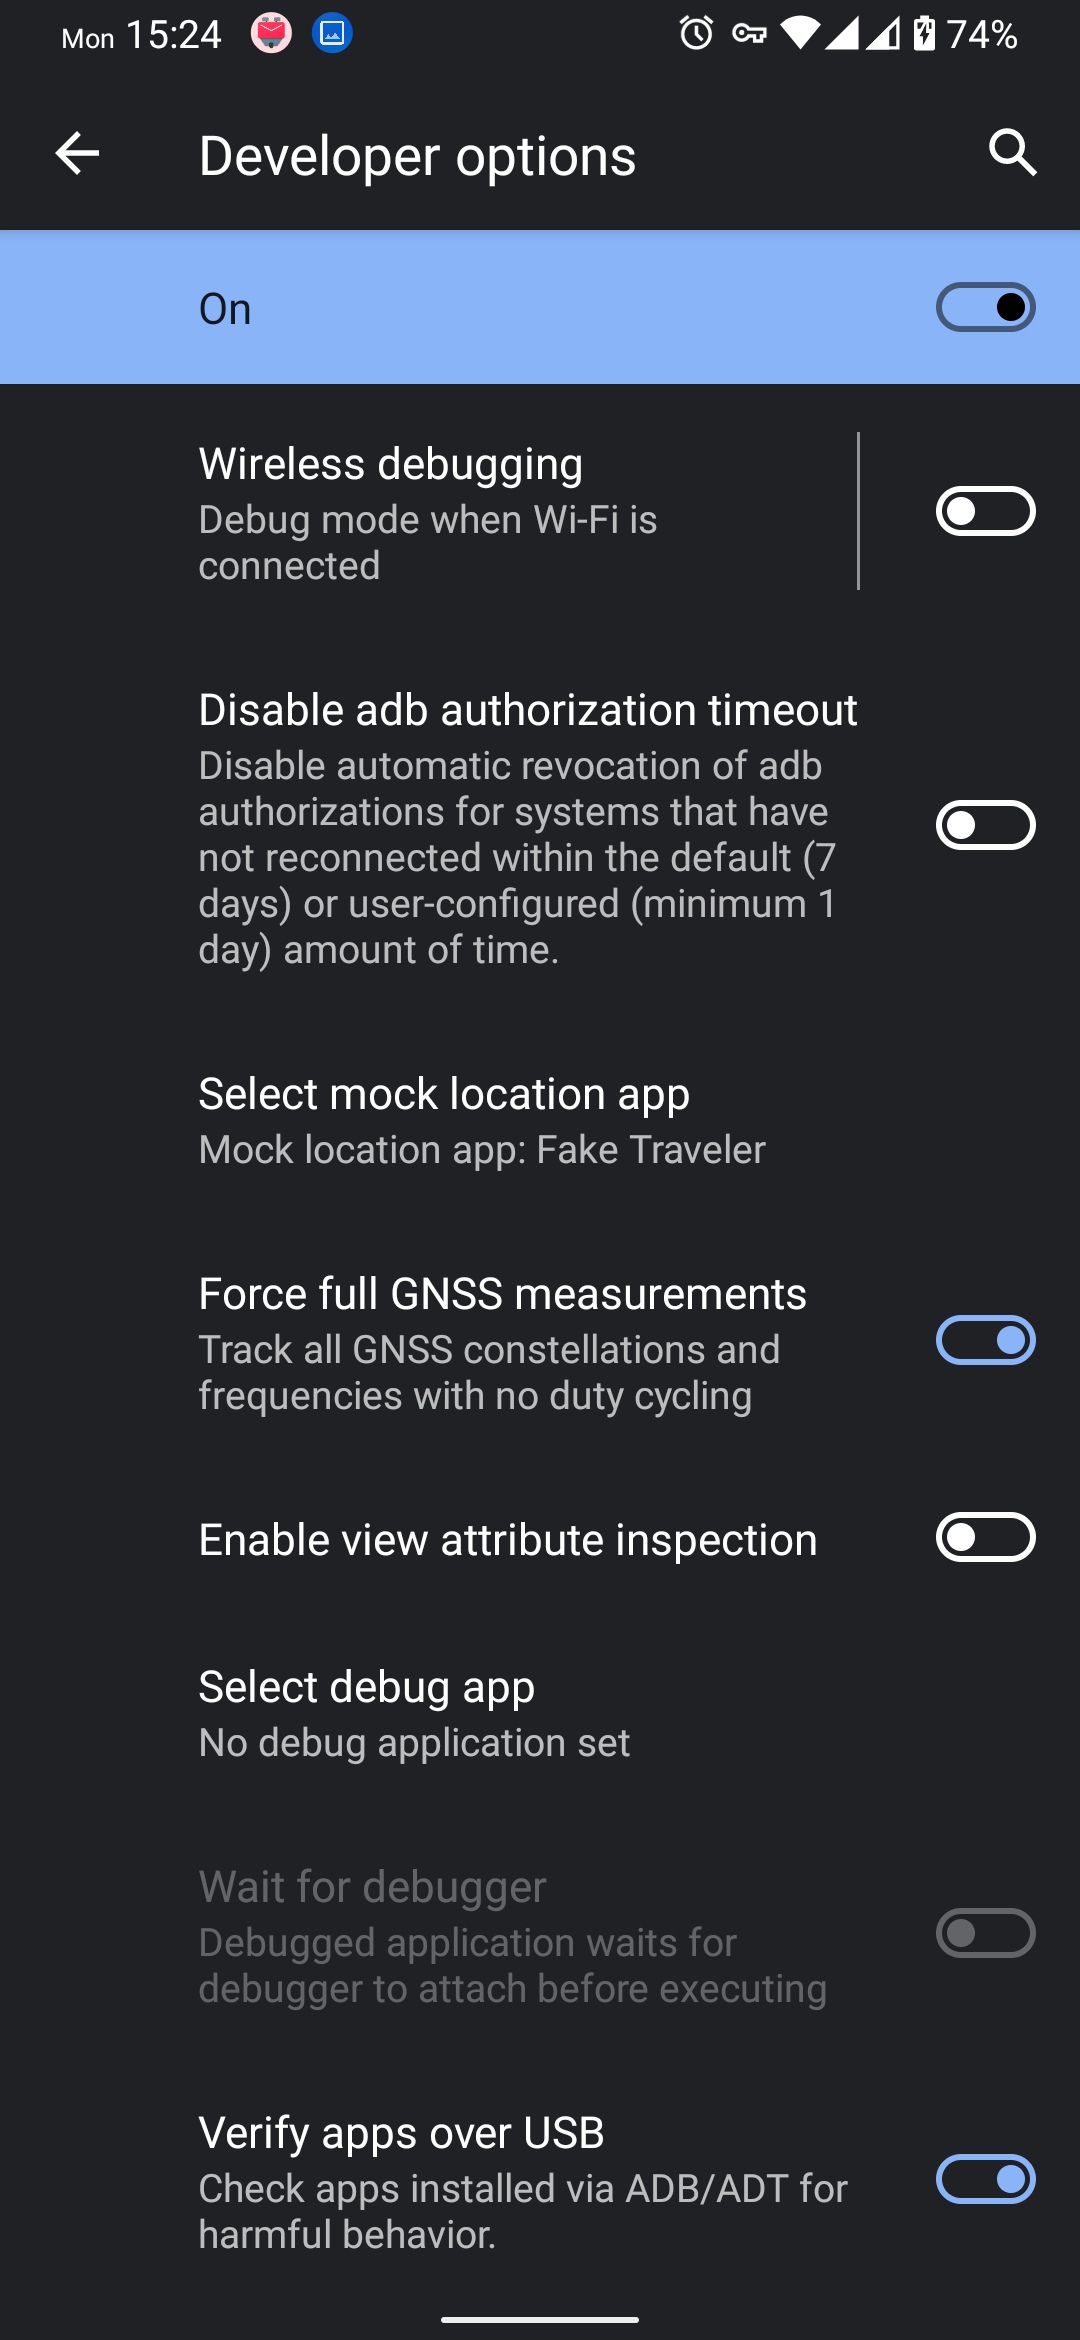 android-mock-fake-location-gps-fake-traveler-app